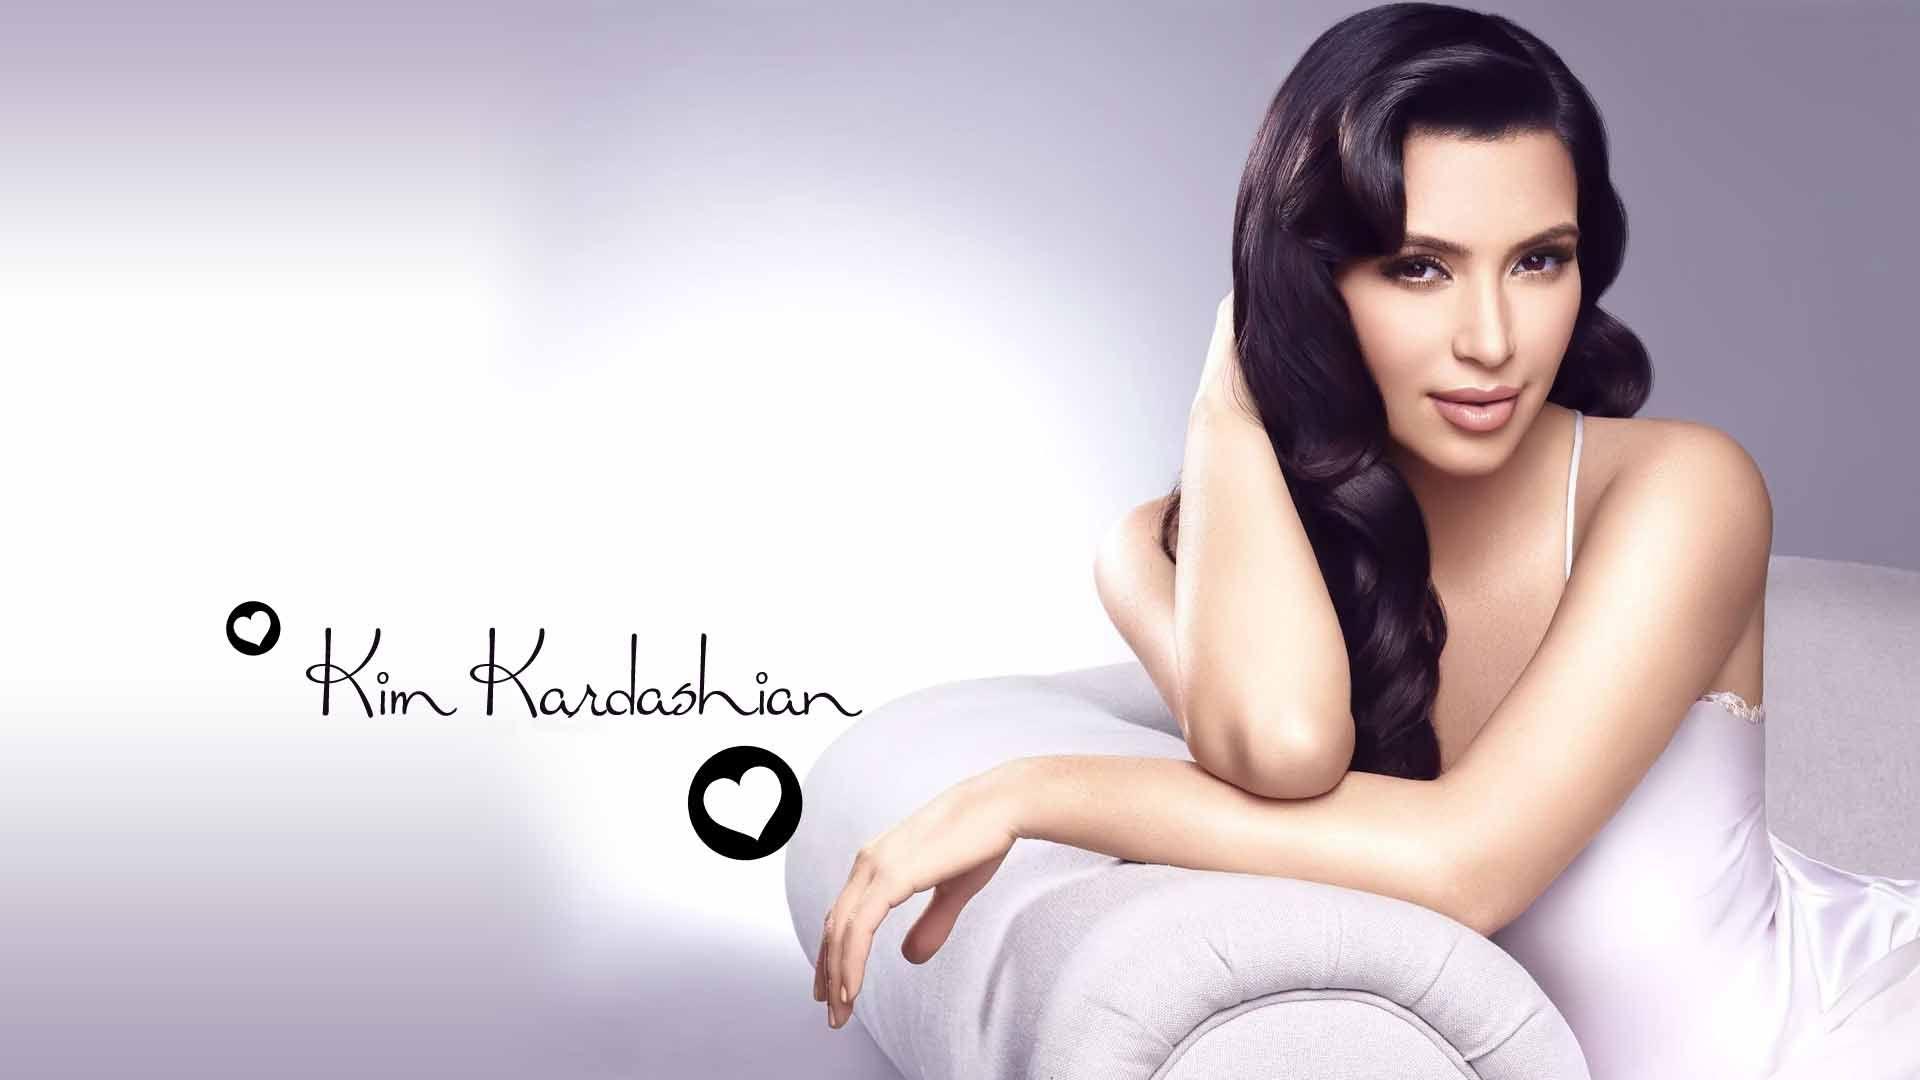 Sweet Kim Kardashian Latest HD Wallpaper Free Download